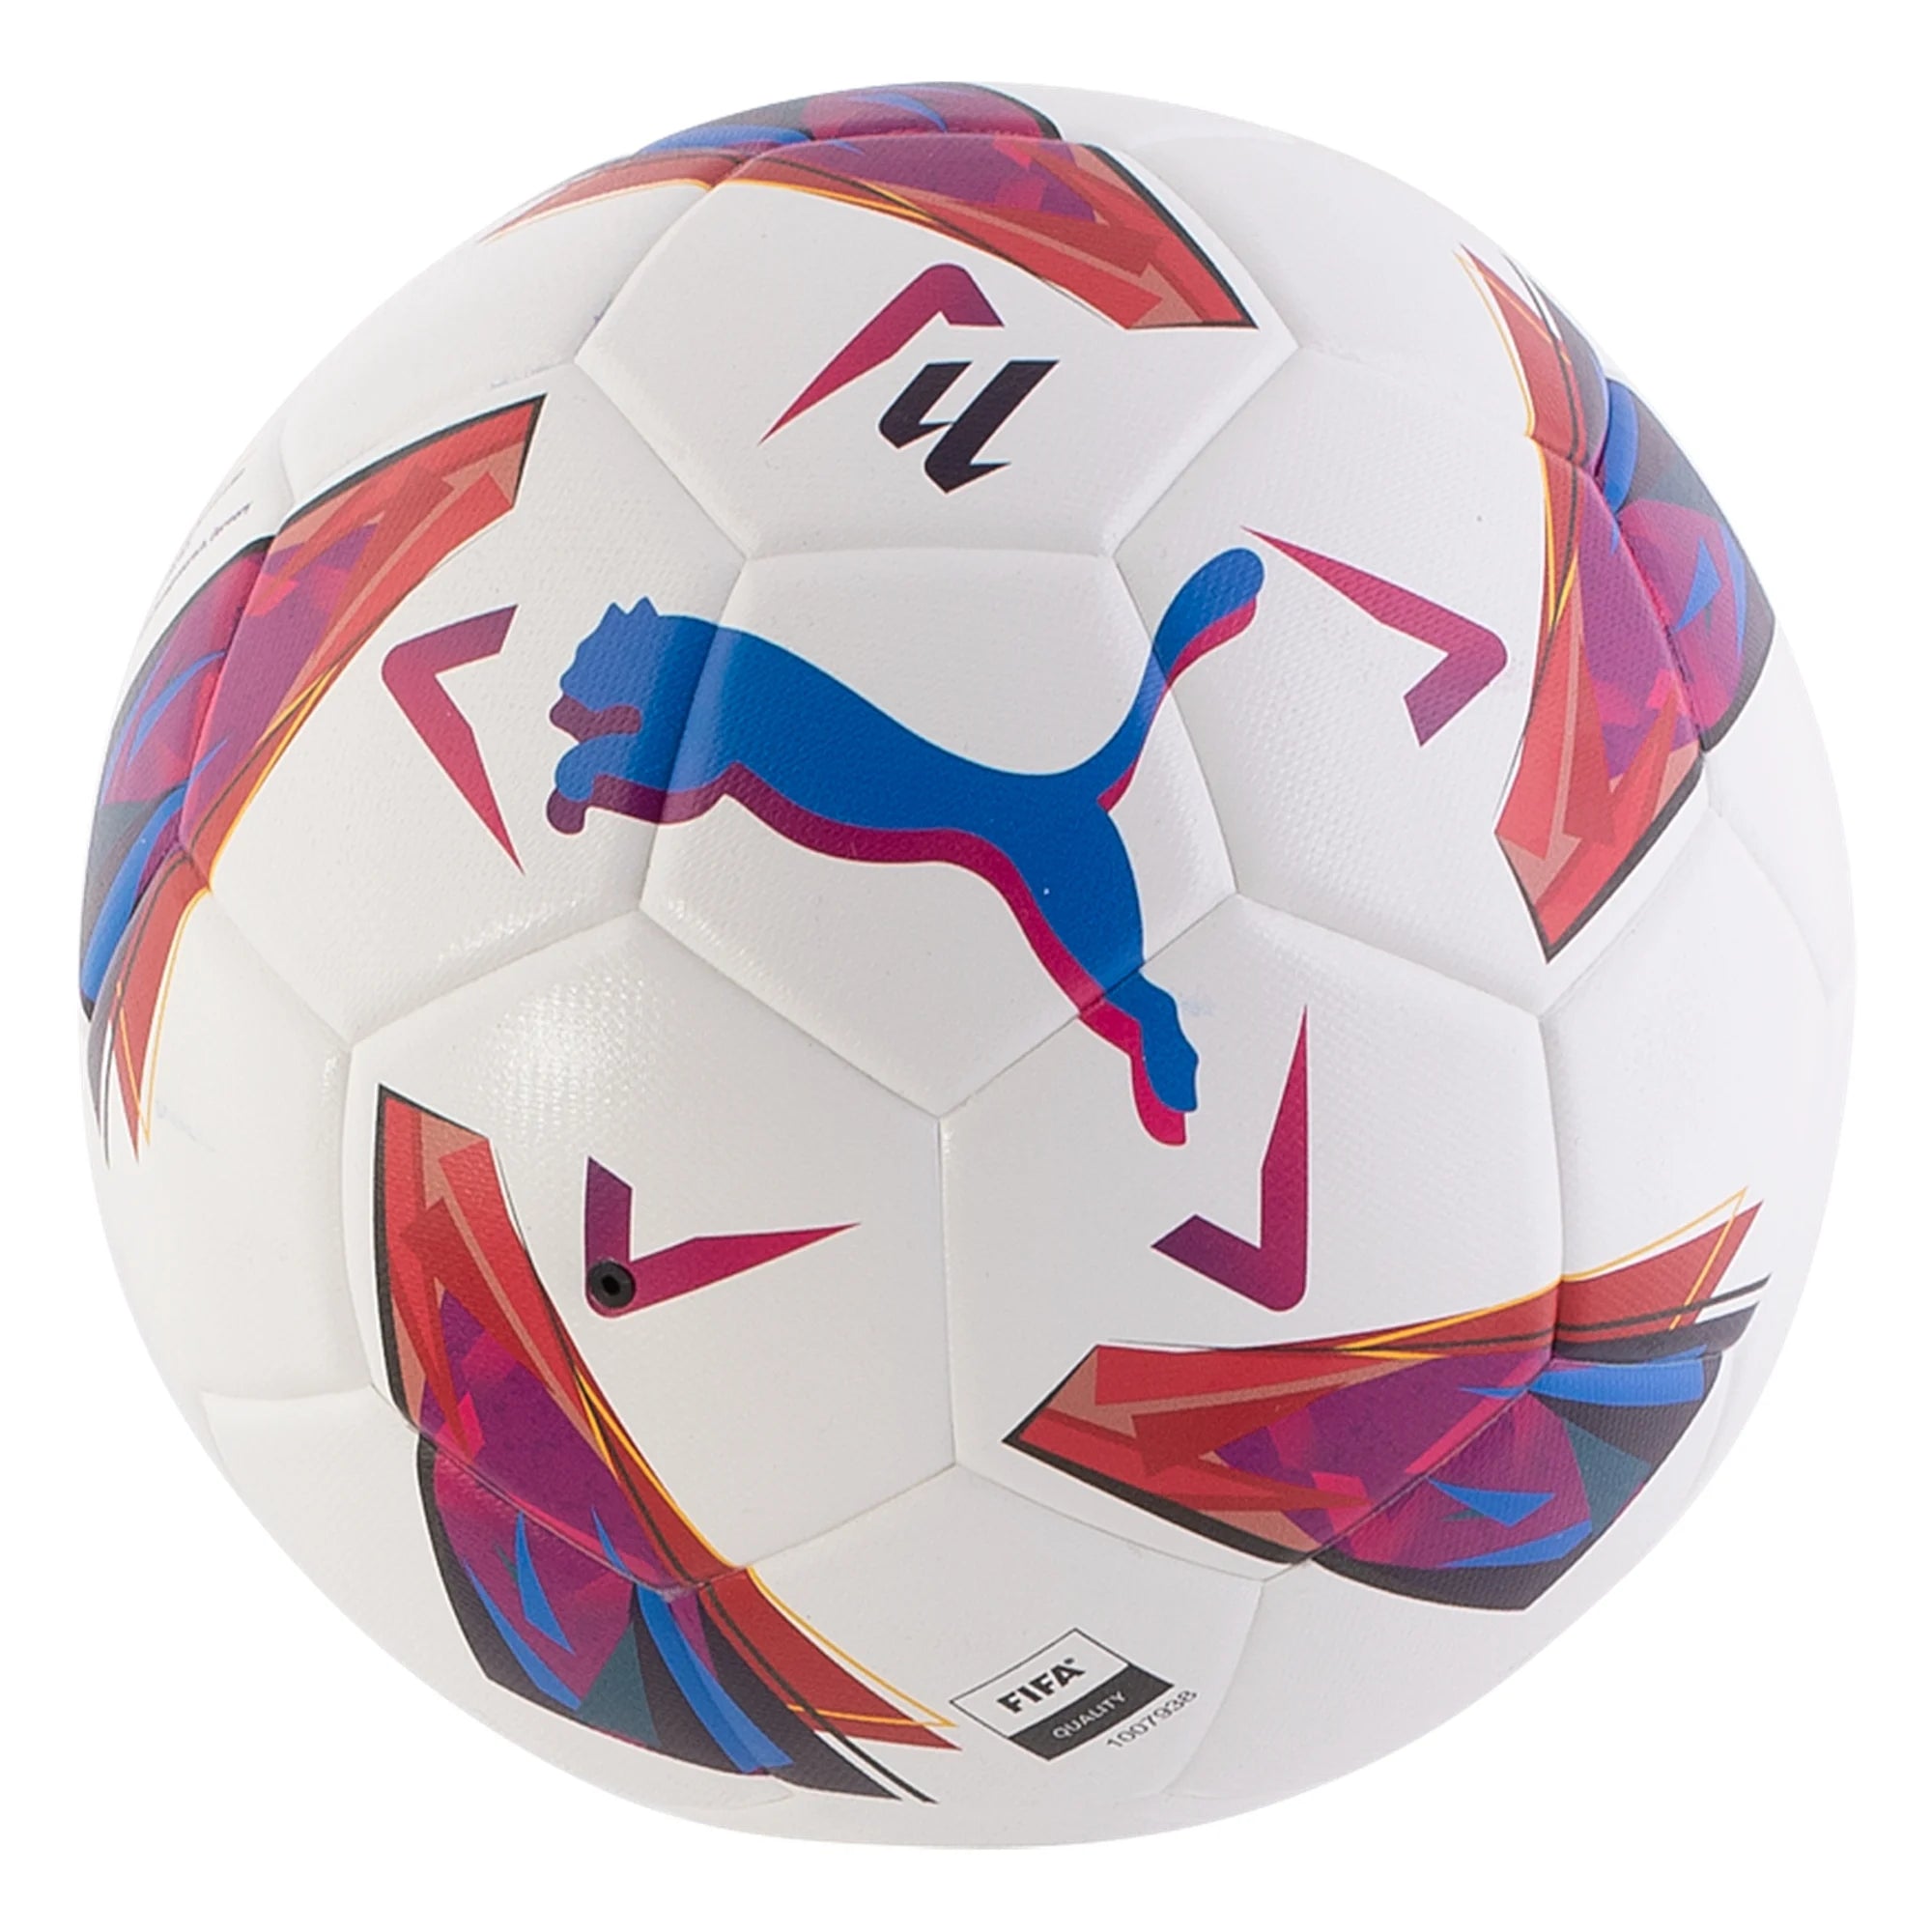 Puma Orbita La Liga FIFA Quality Training Soccer Ball 23/24